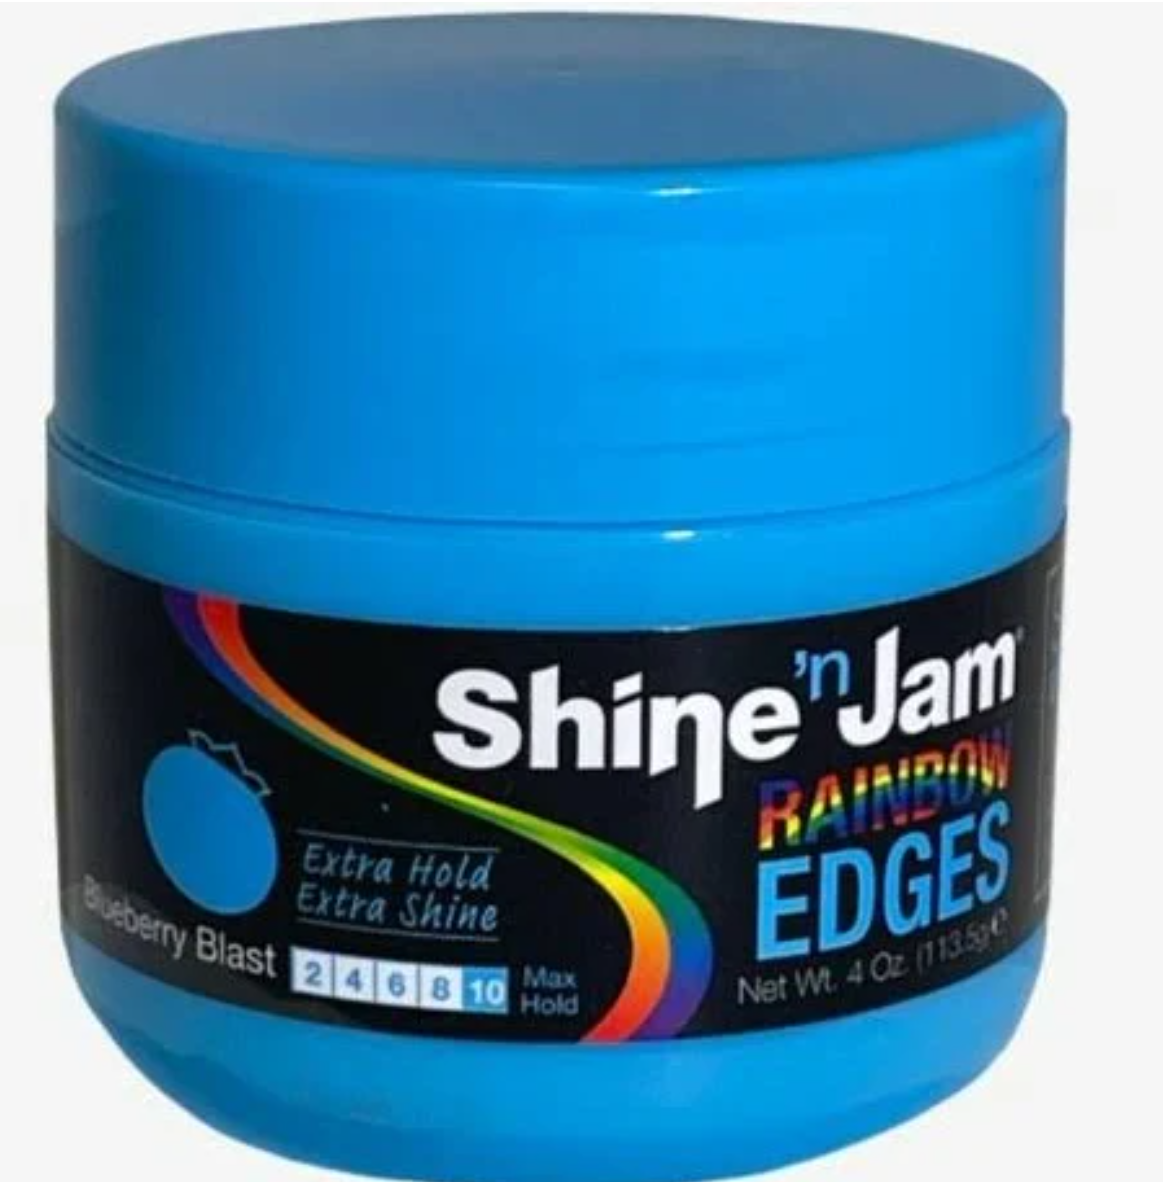 AMPRO SHINE ‘N JAM RAINBOW EDGES EDGE CONTROL GEL